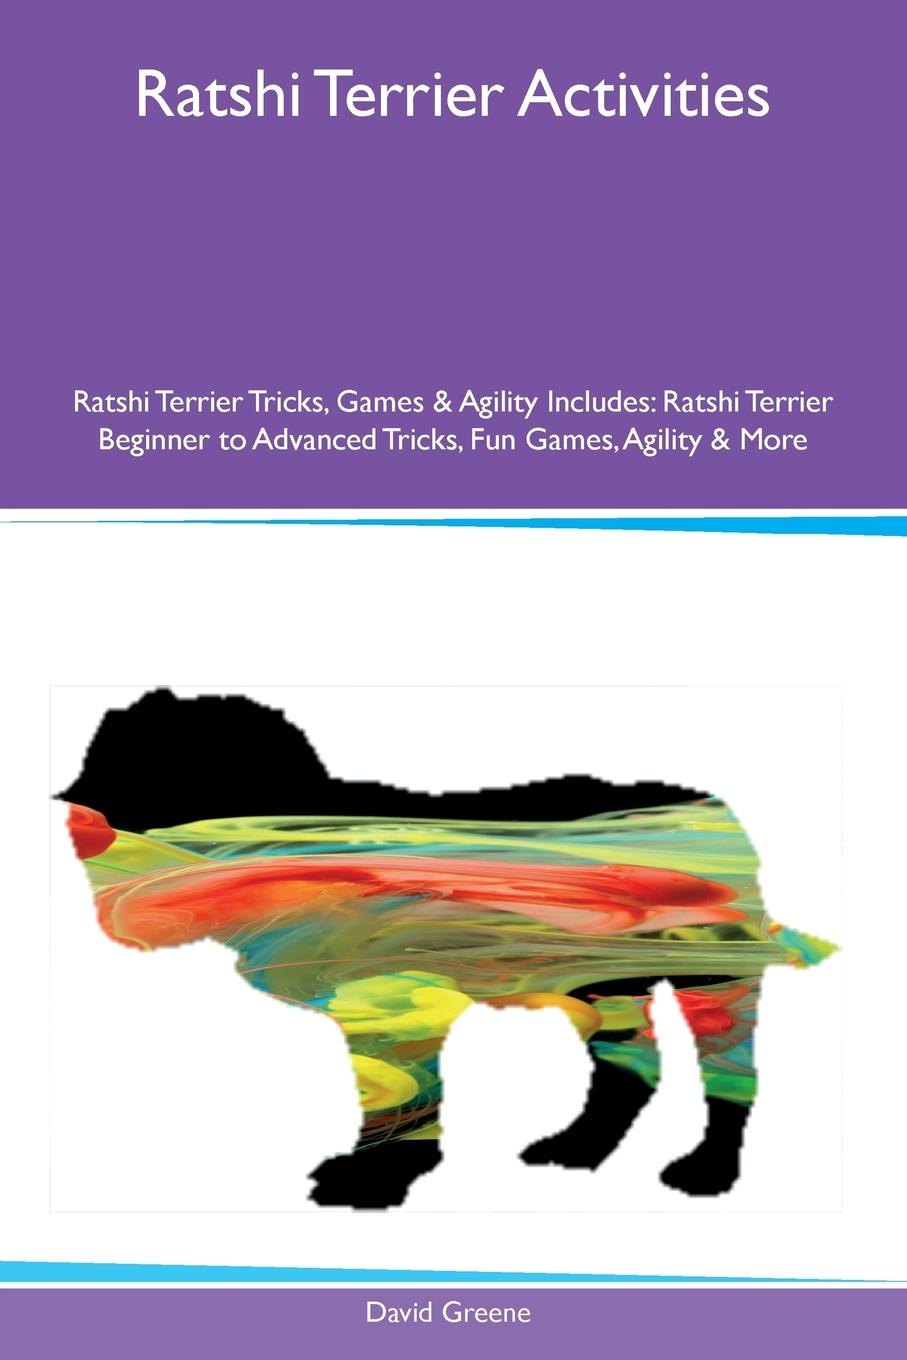 Ratshi Terrier Activities Ratshi Terrier Tricks, Games & Agility Includes. Ratshi Terrier Beginner to Advanced Tricks, Fun Games, Agility & More